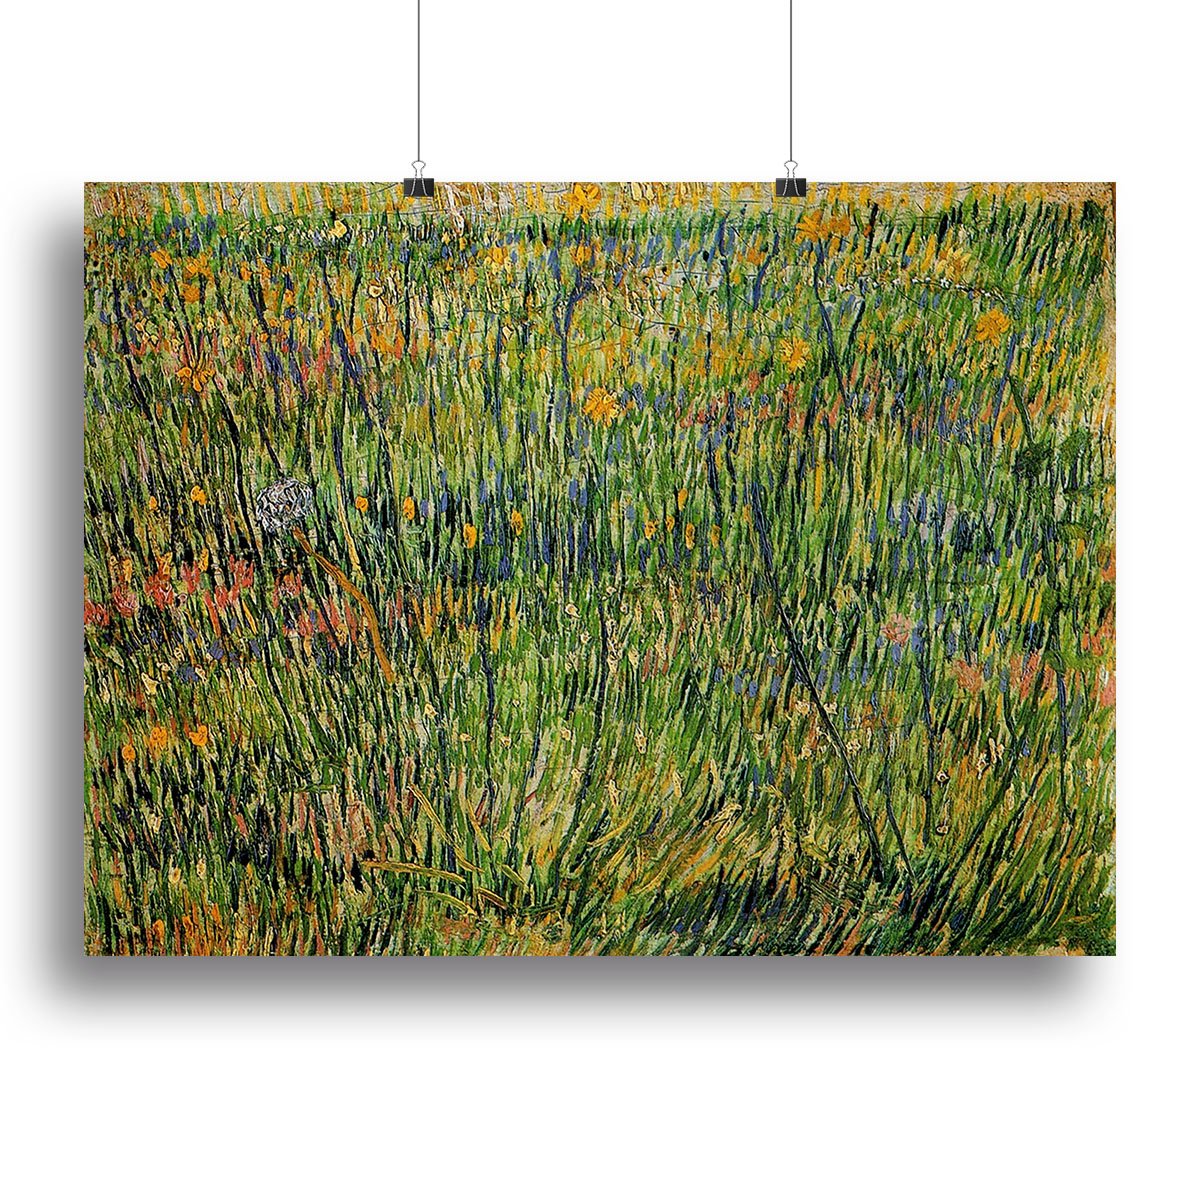 Pasture in Bloom by Van Gogh Canvas Print or Poster